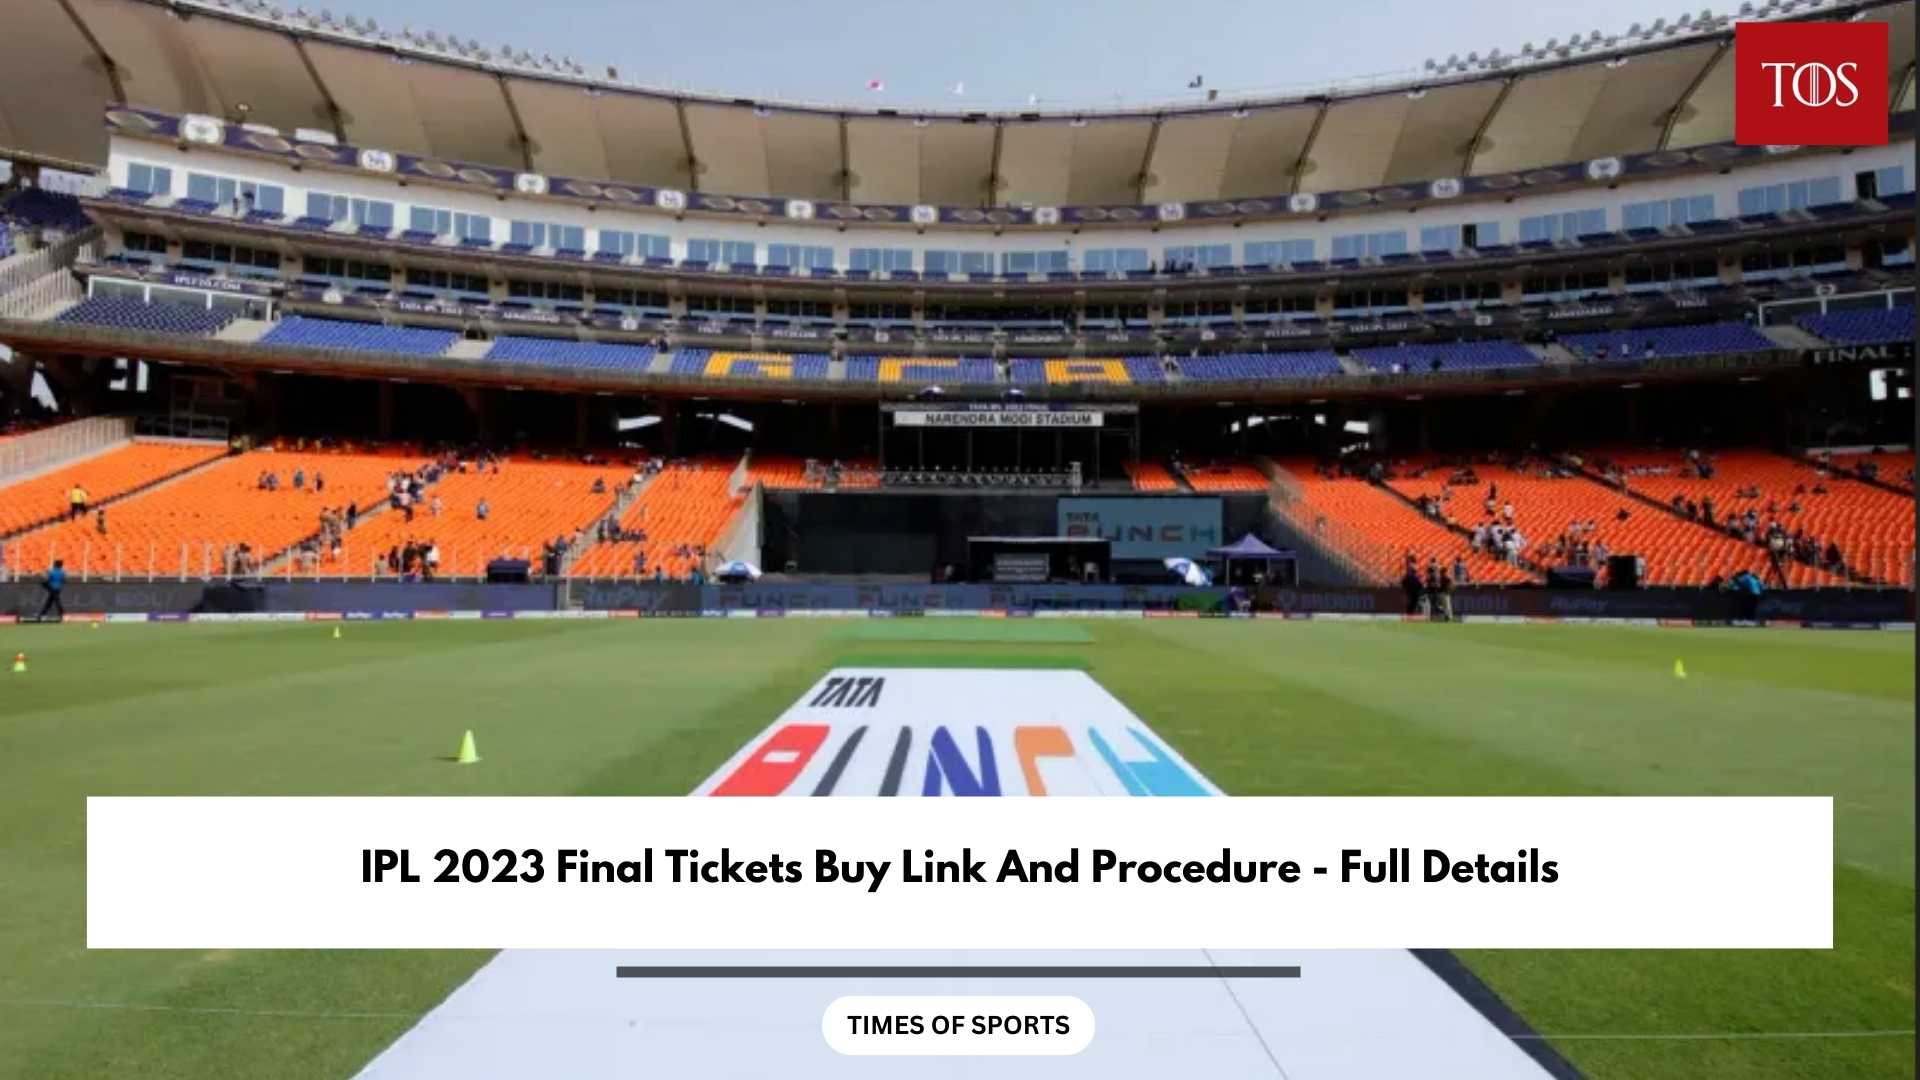 IPL 2023 Final Tickets Buy Link And Procedure Full Details